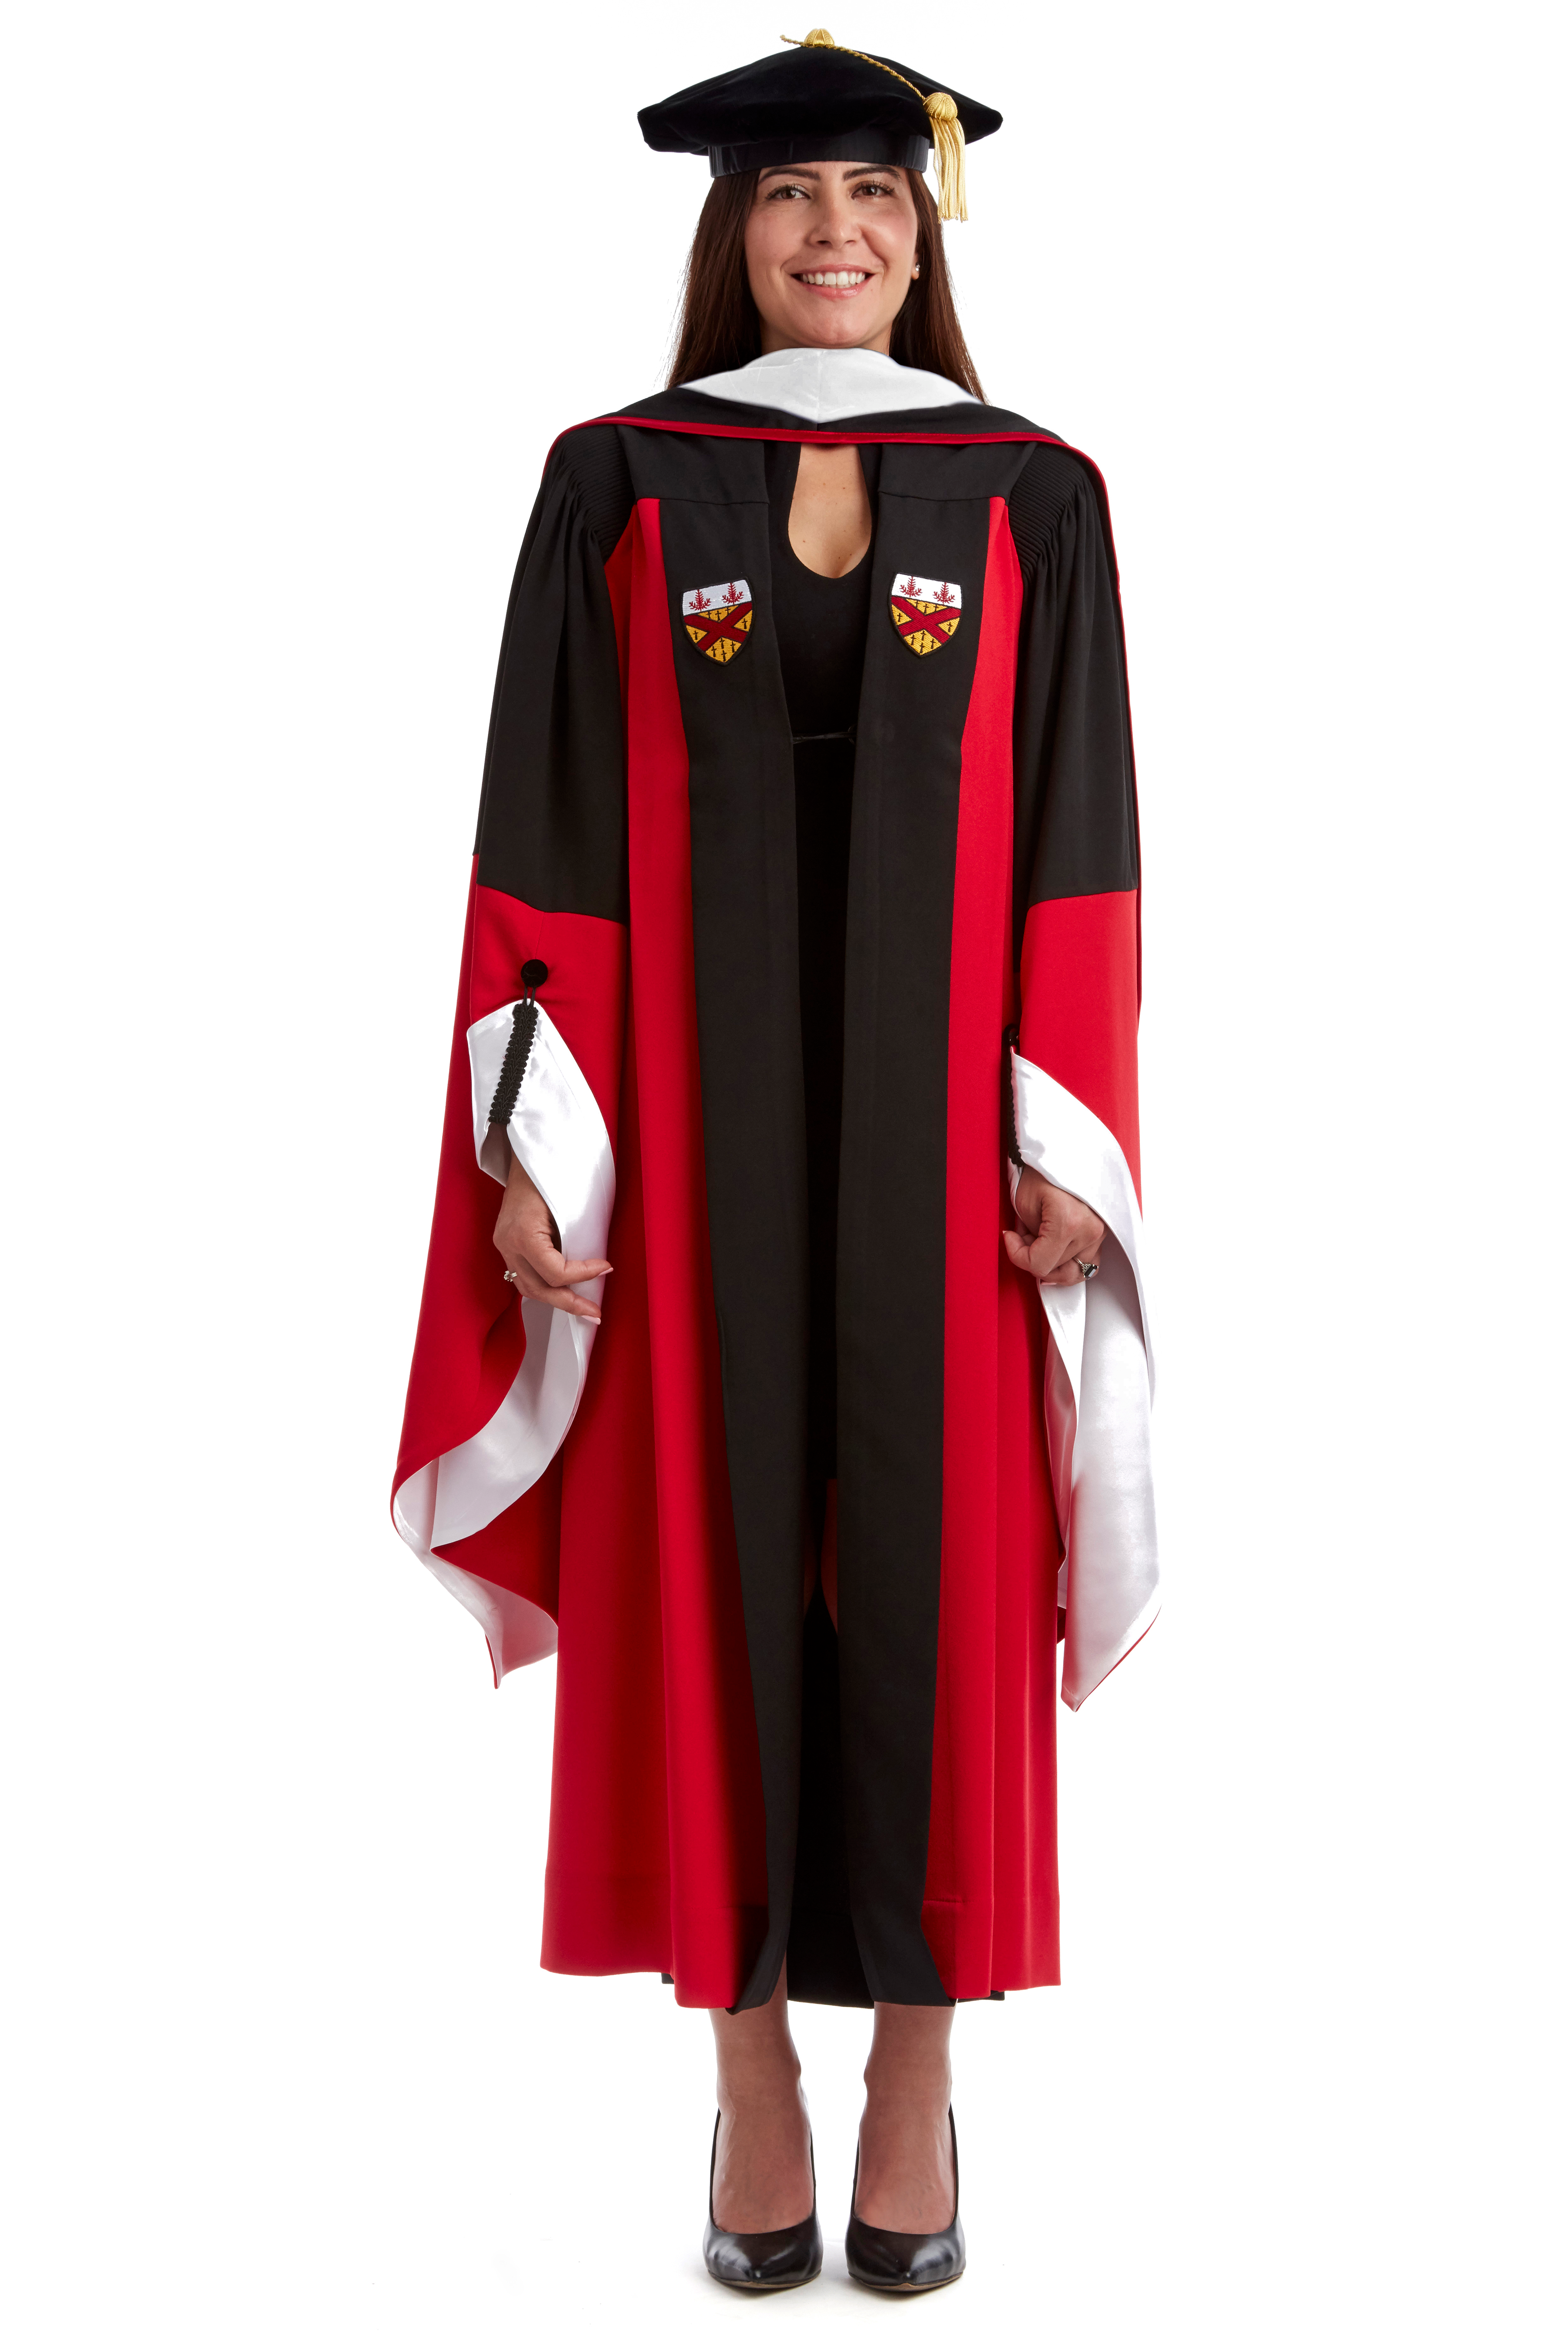 PHD & Doctorate Graduation Regalia – Graduation Cap and Gown